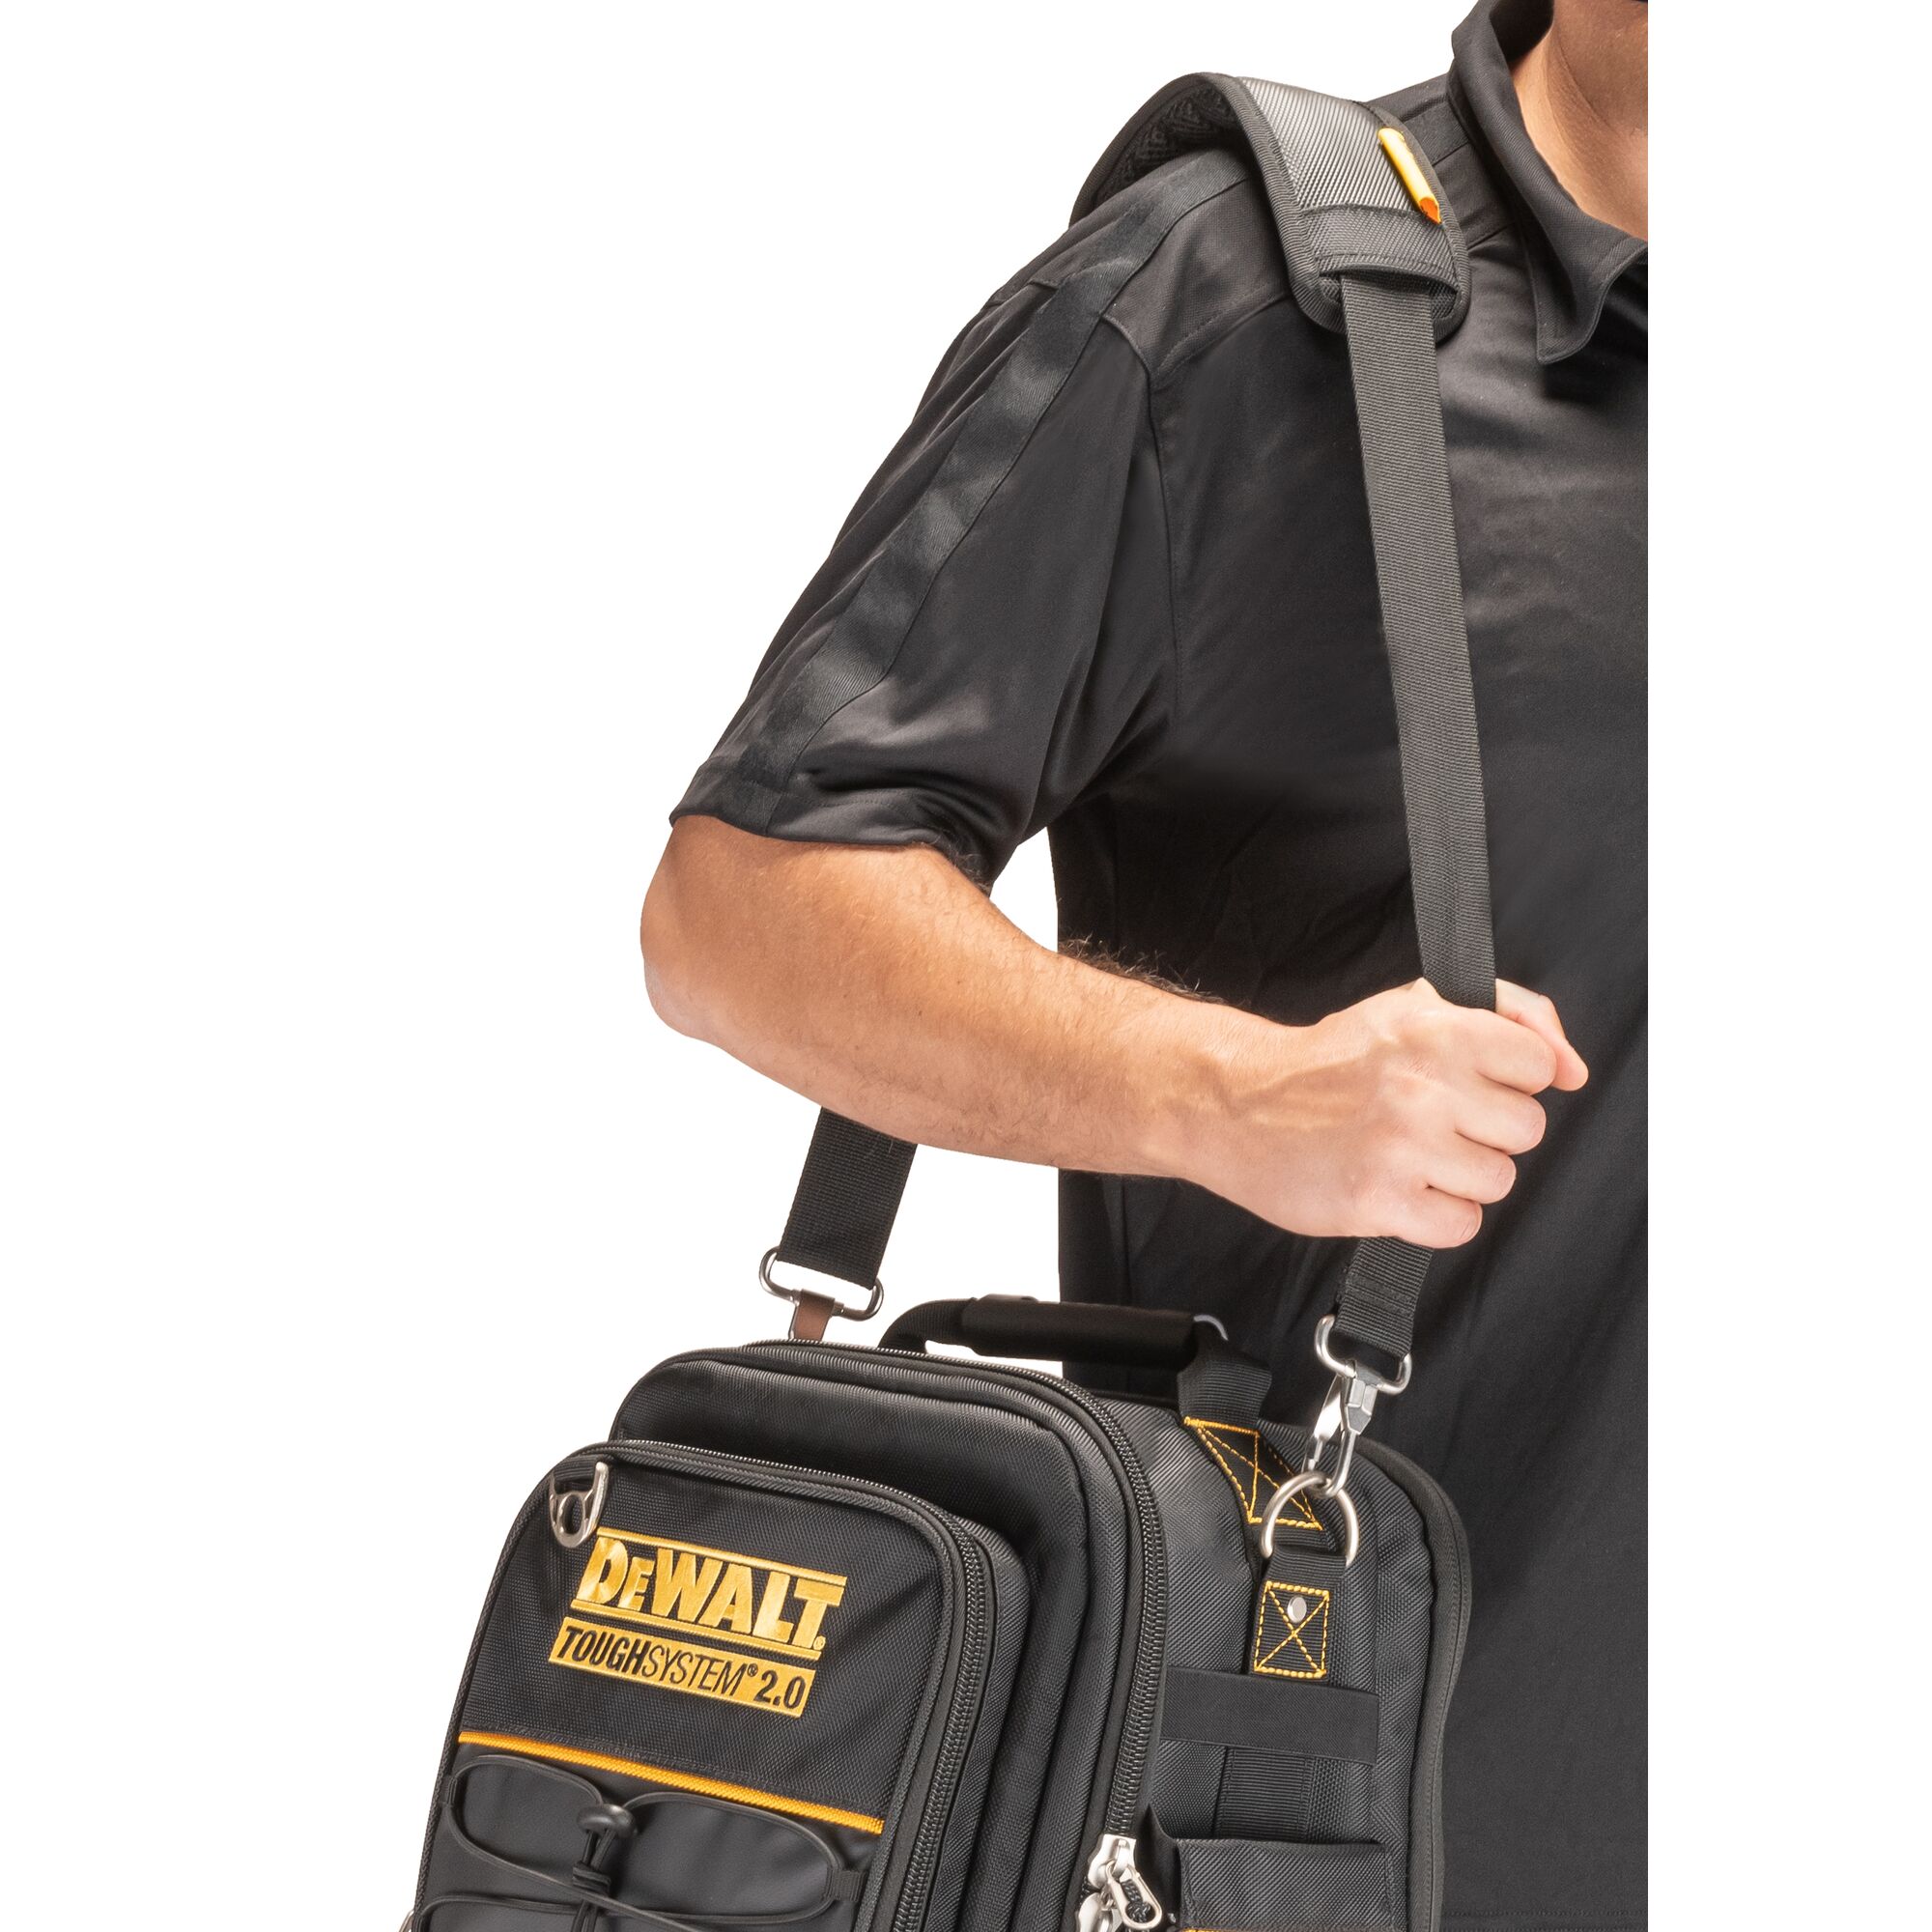 ToughSystem® 2.0 Compact Tool Bag | DEWALT